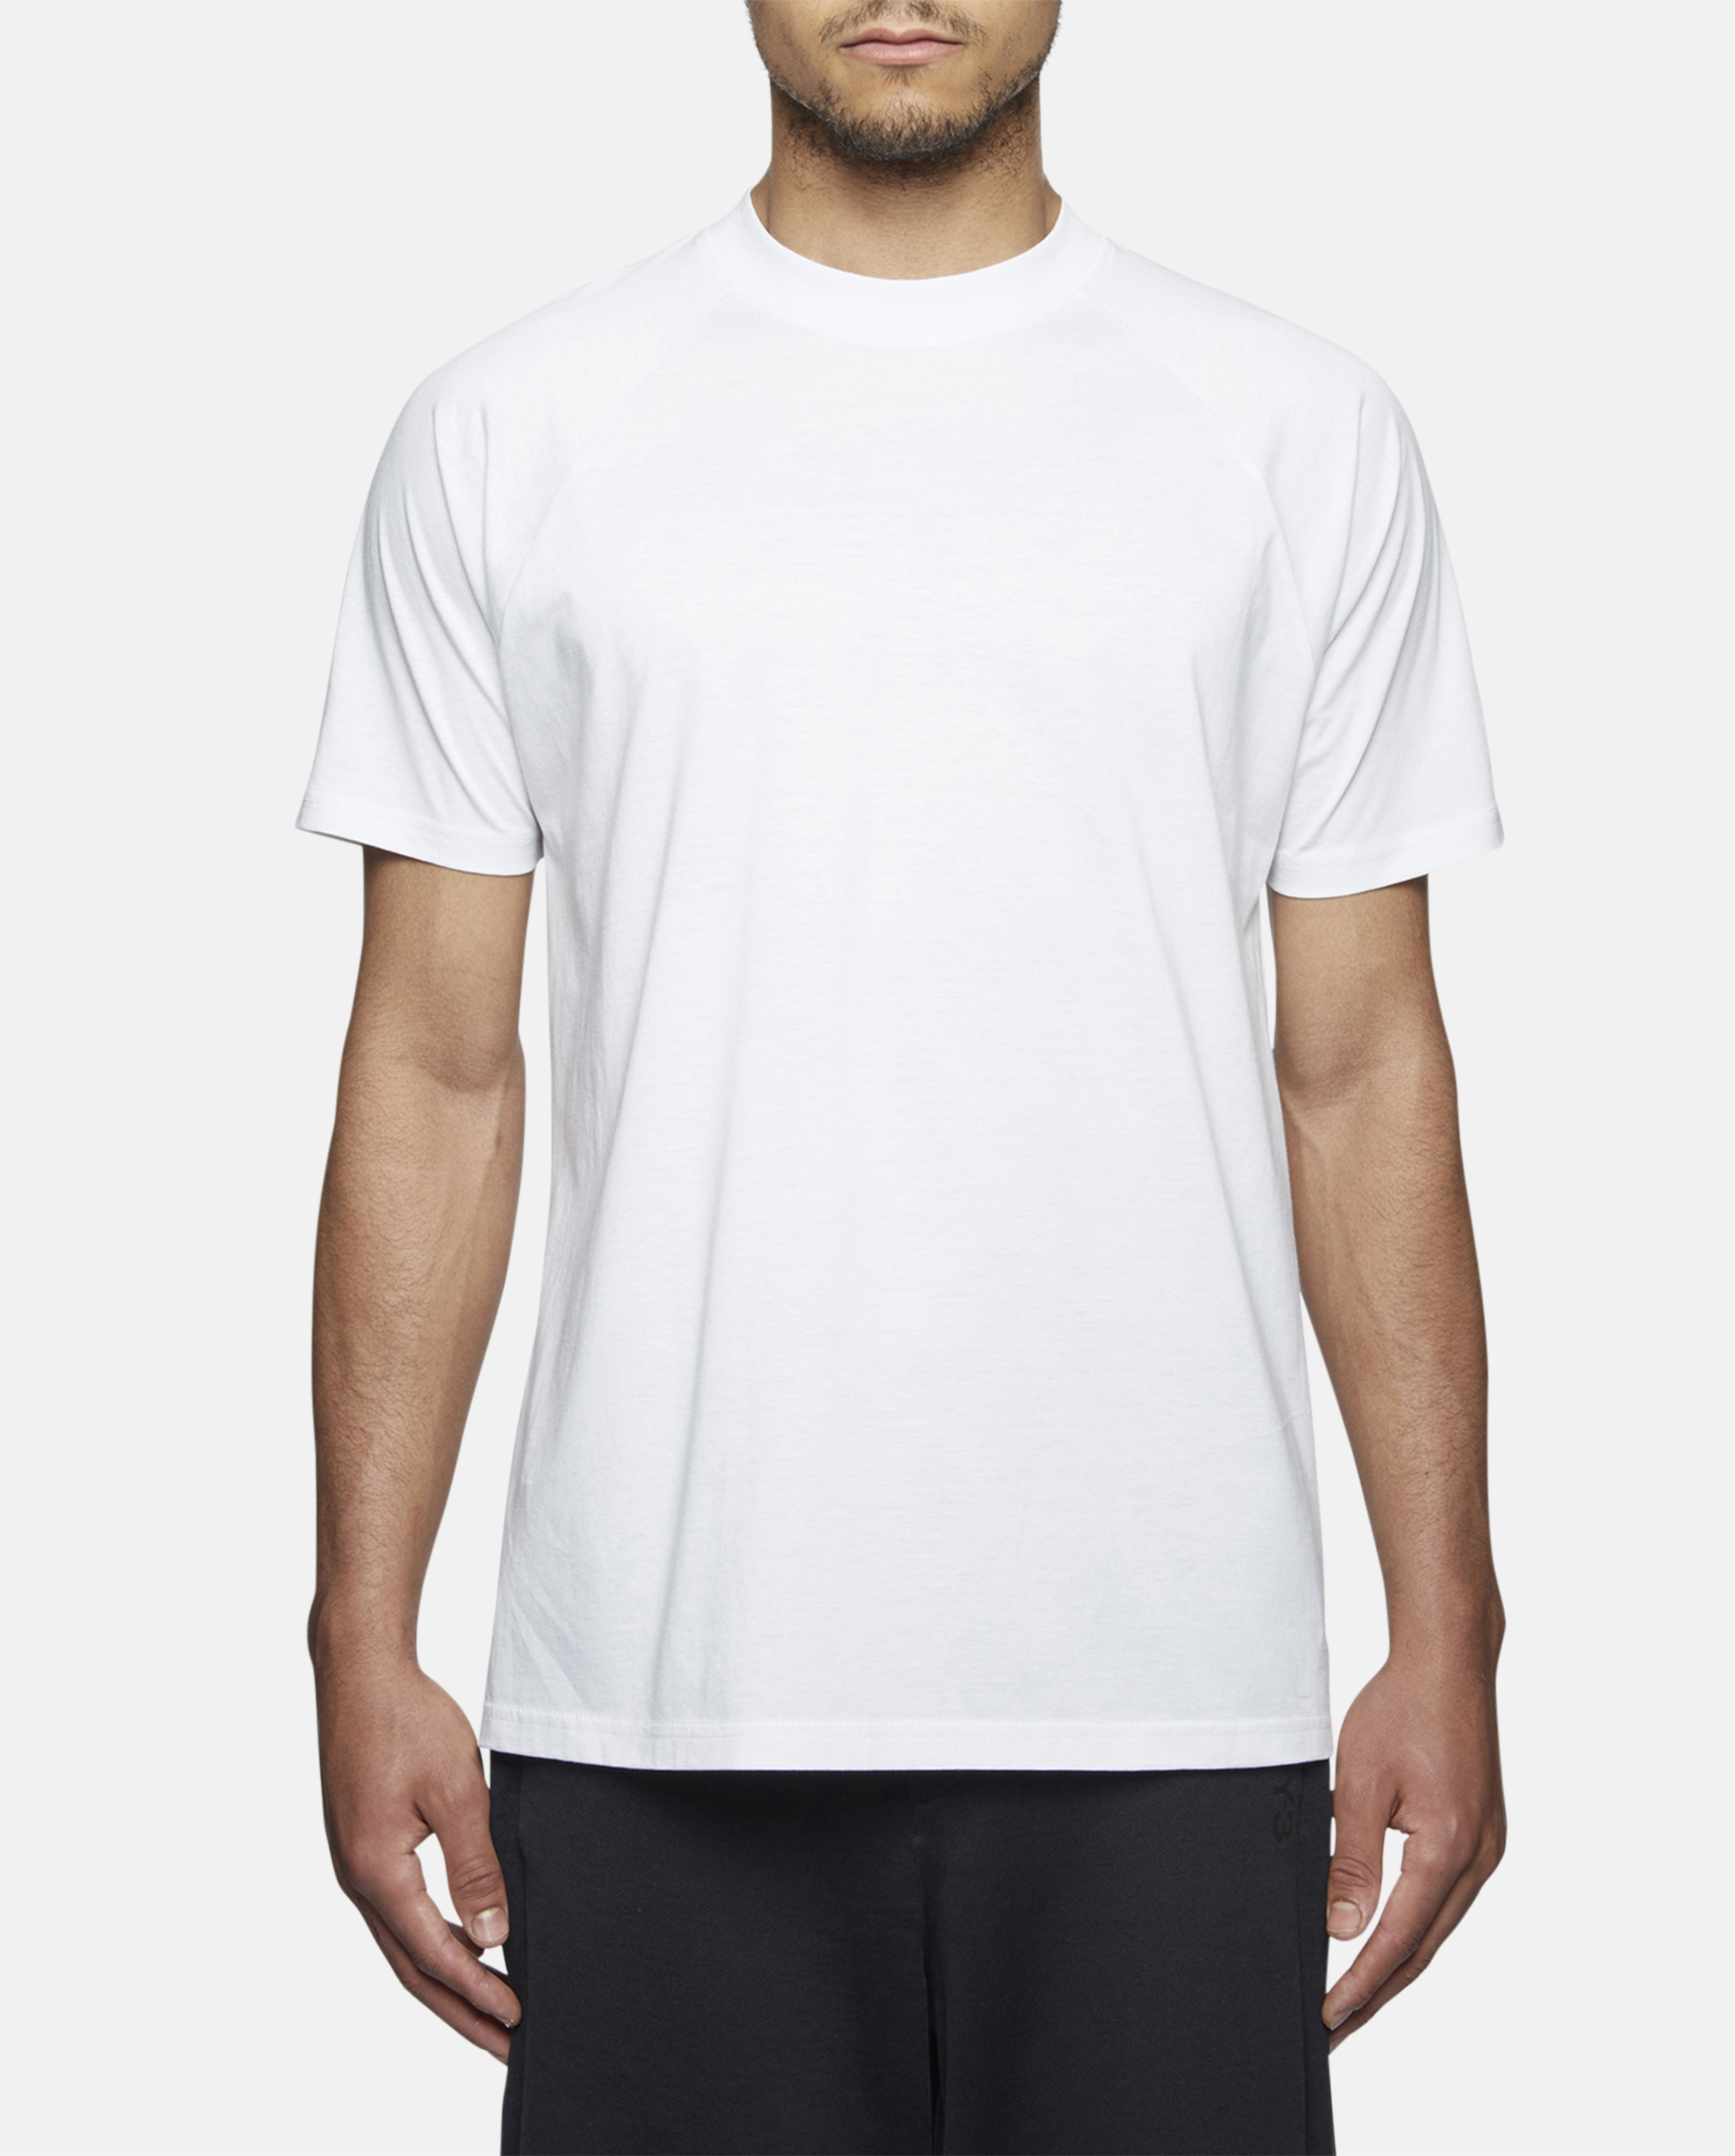 Y-3 Cotton Qr Code T-shirt in Black for Men - Lyst